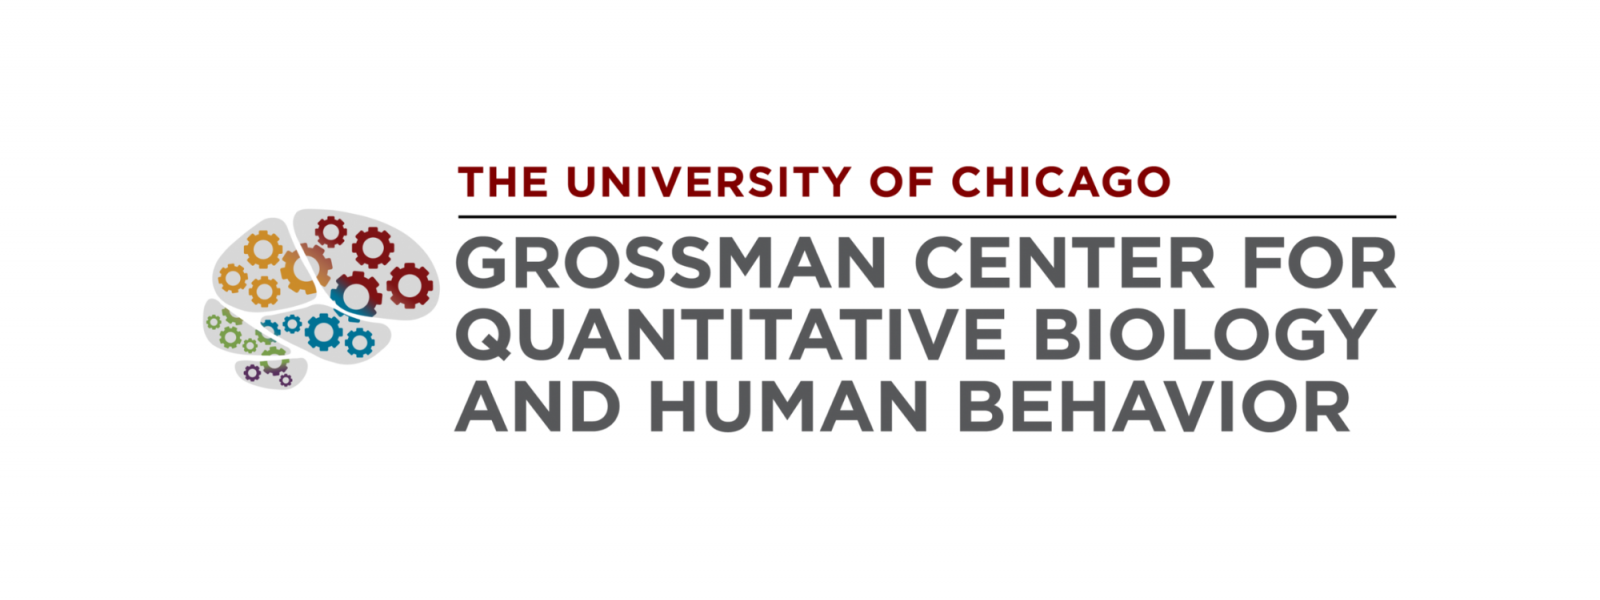 Grossman center logo